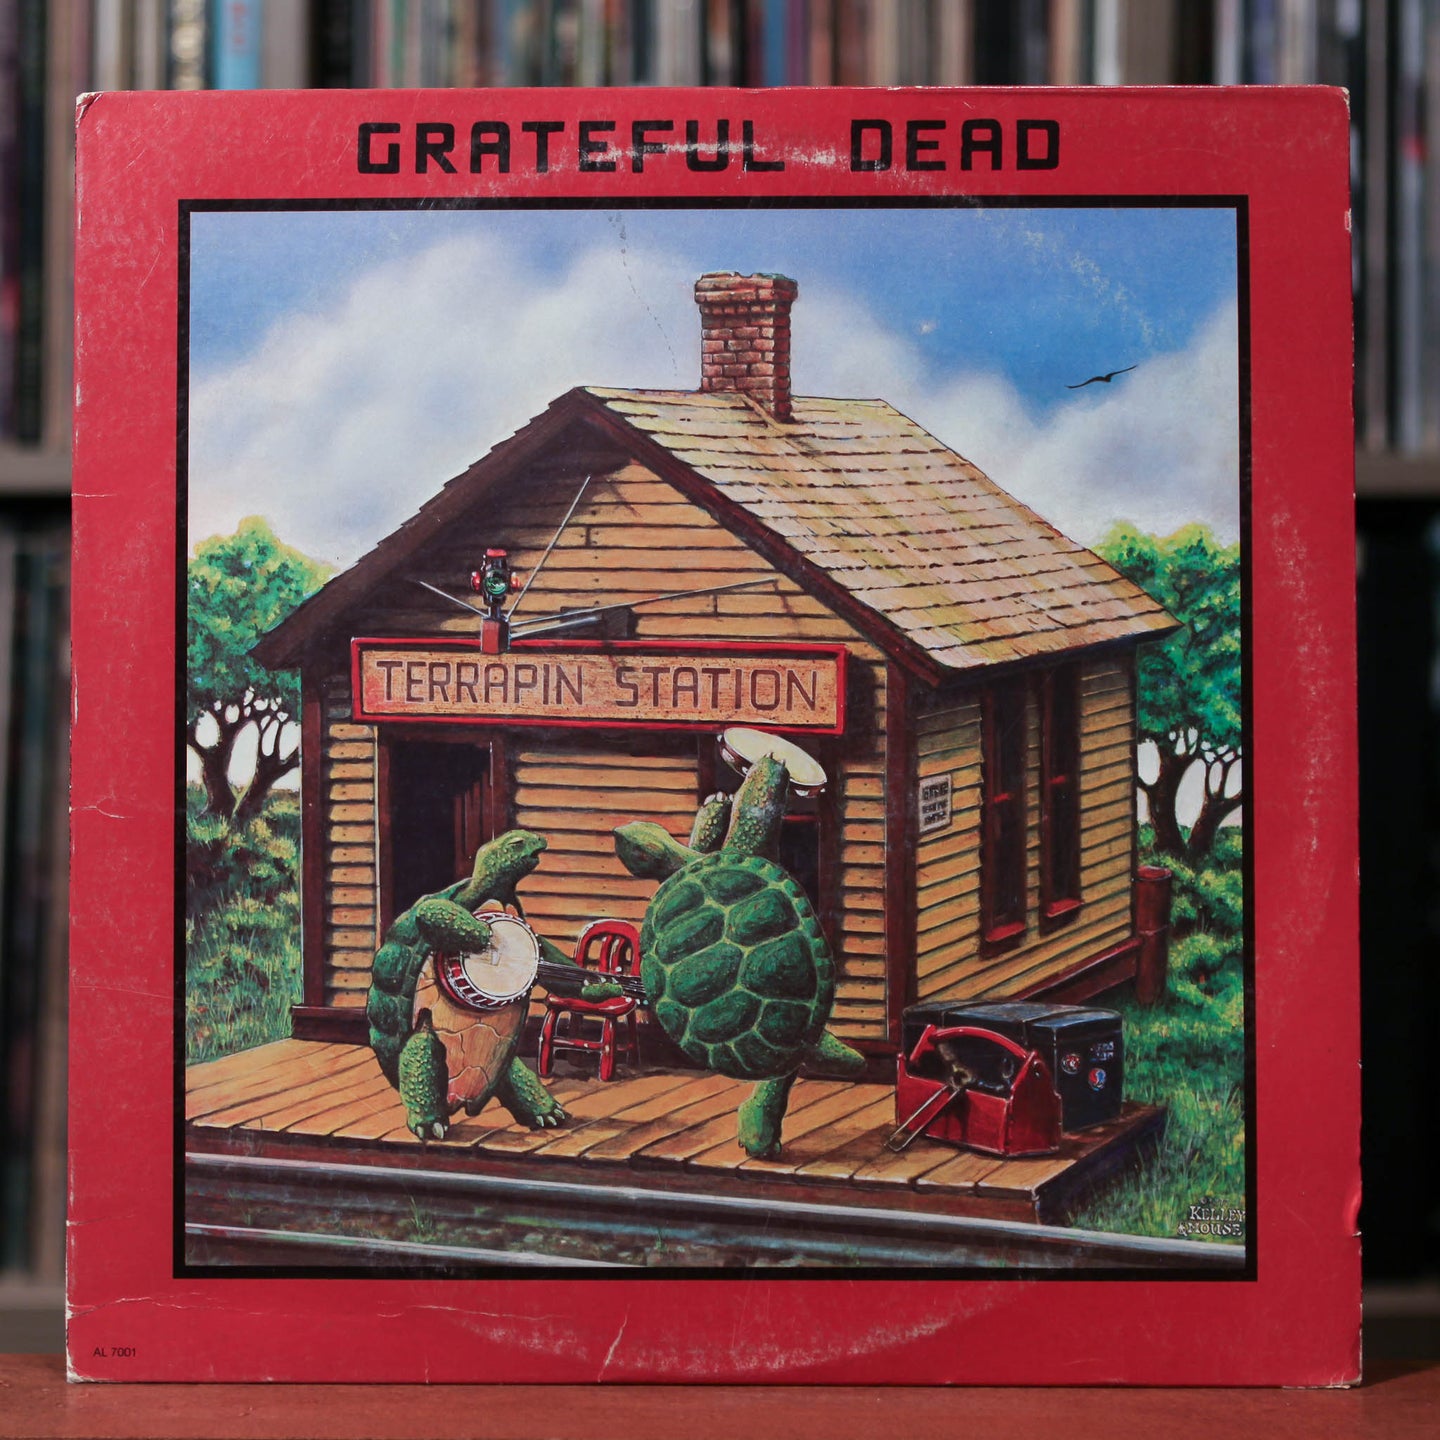 Grateful Dead - Terrapin Station - 1977 Arista - VG/VG